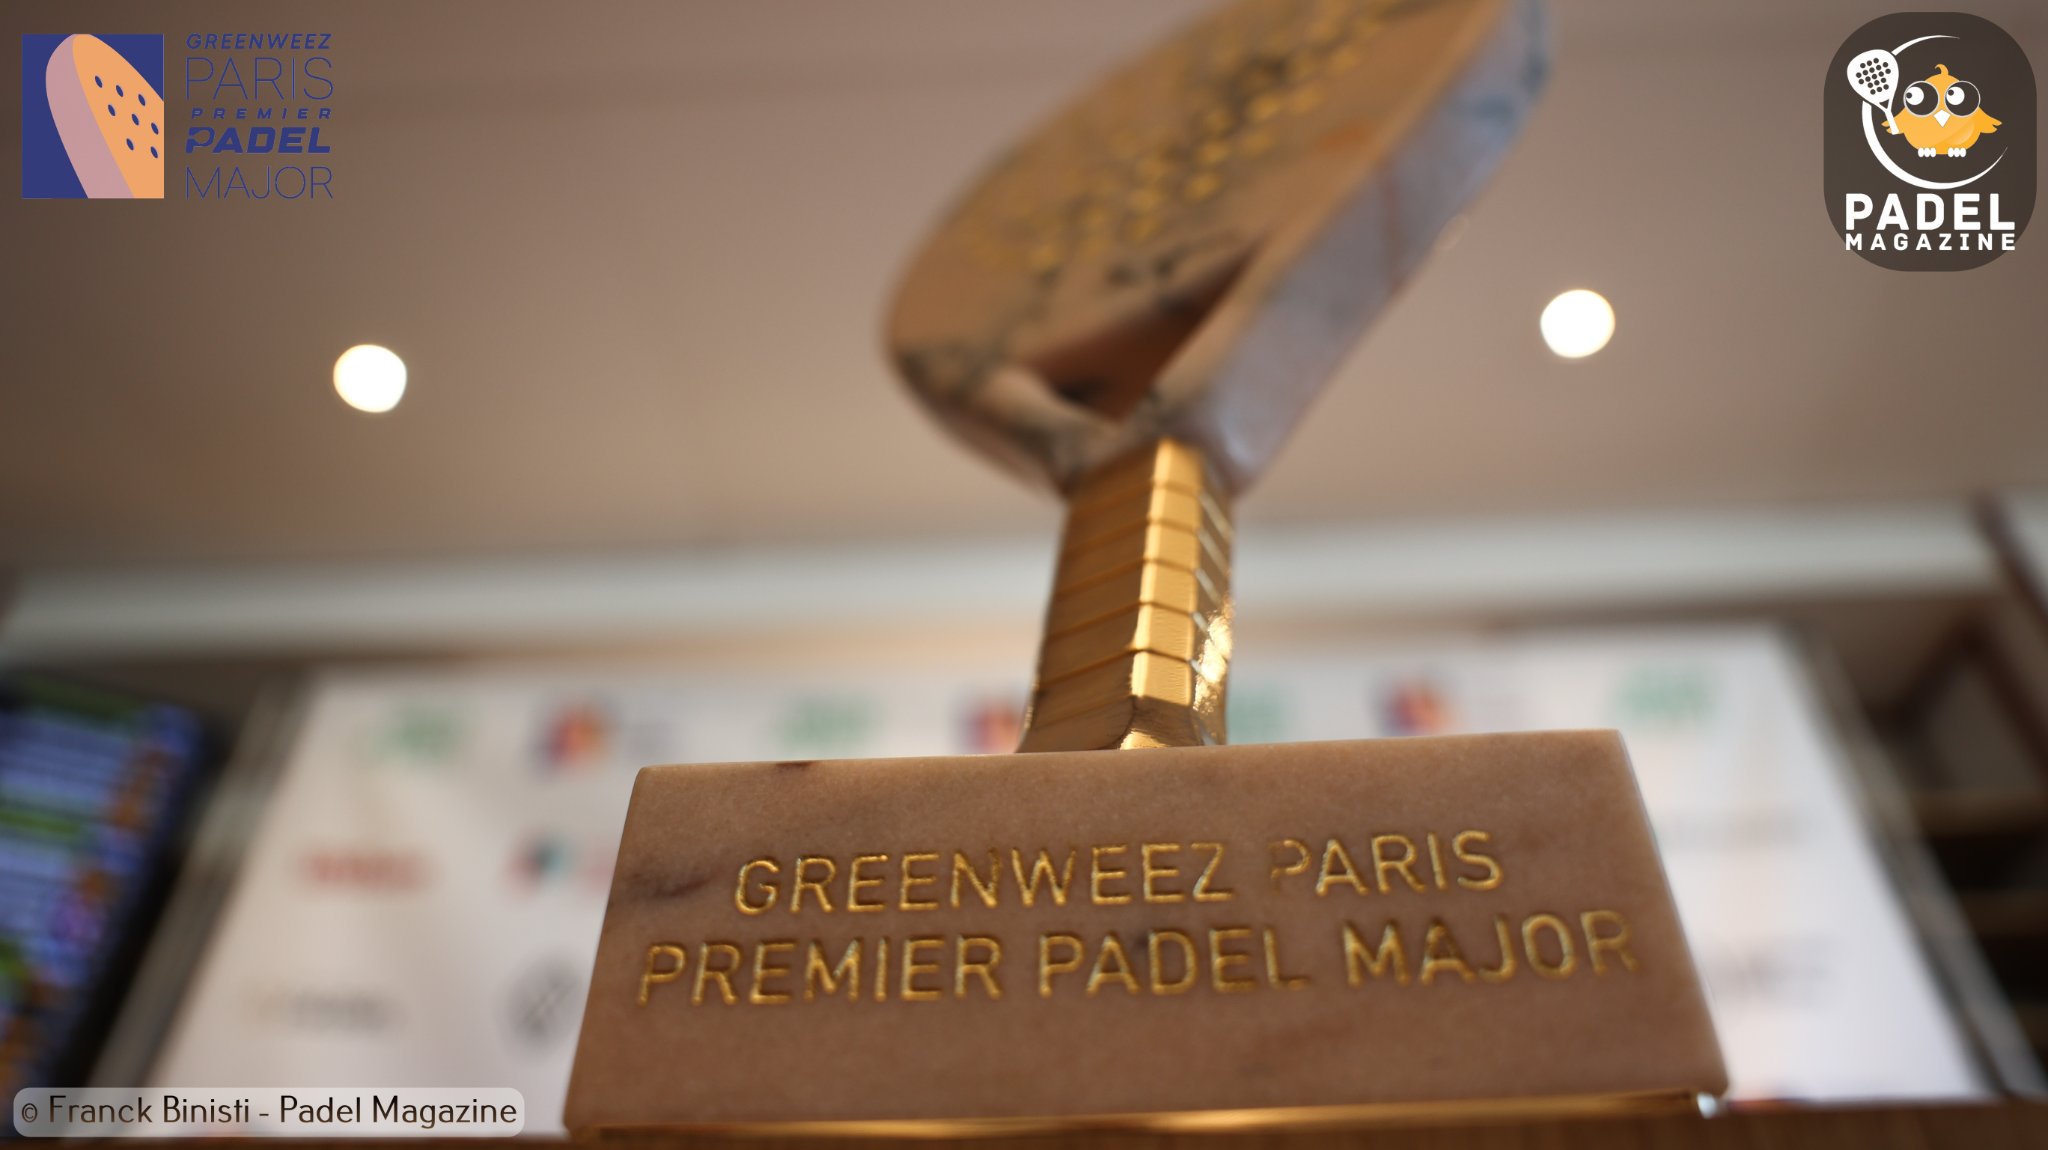 greenweez paris premier padel major trofeo roland garros 2022